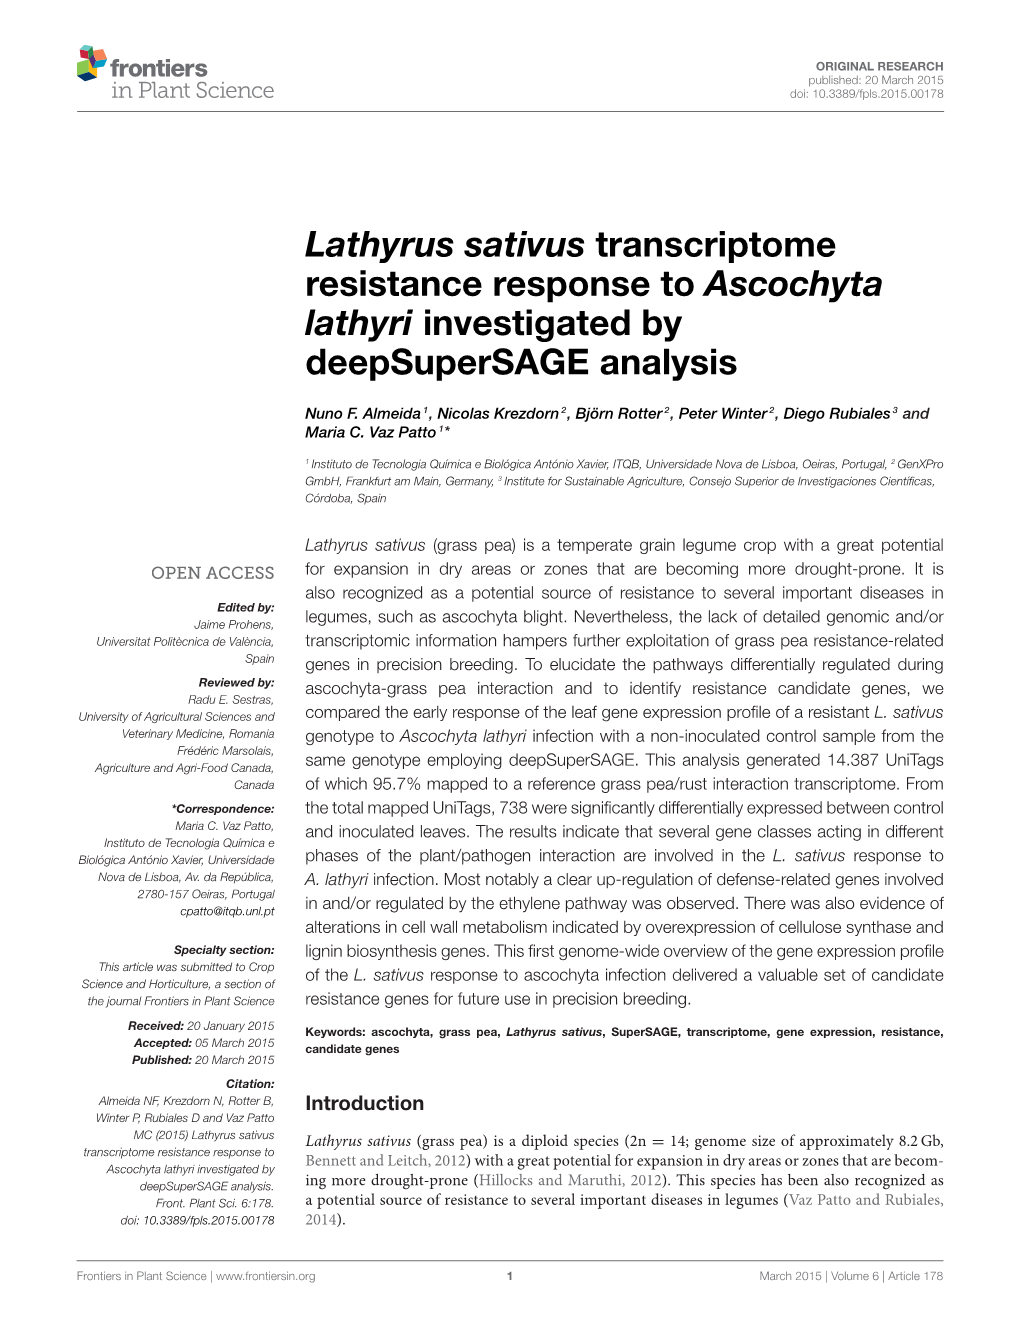 Lathyrus Sativus Transcriptome Resistance Response to Ascochyta Lathyri Investigated by Deepsupersage Analysis